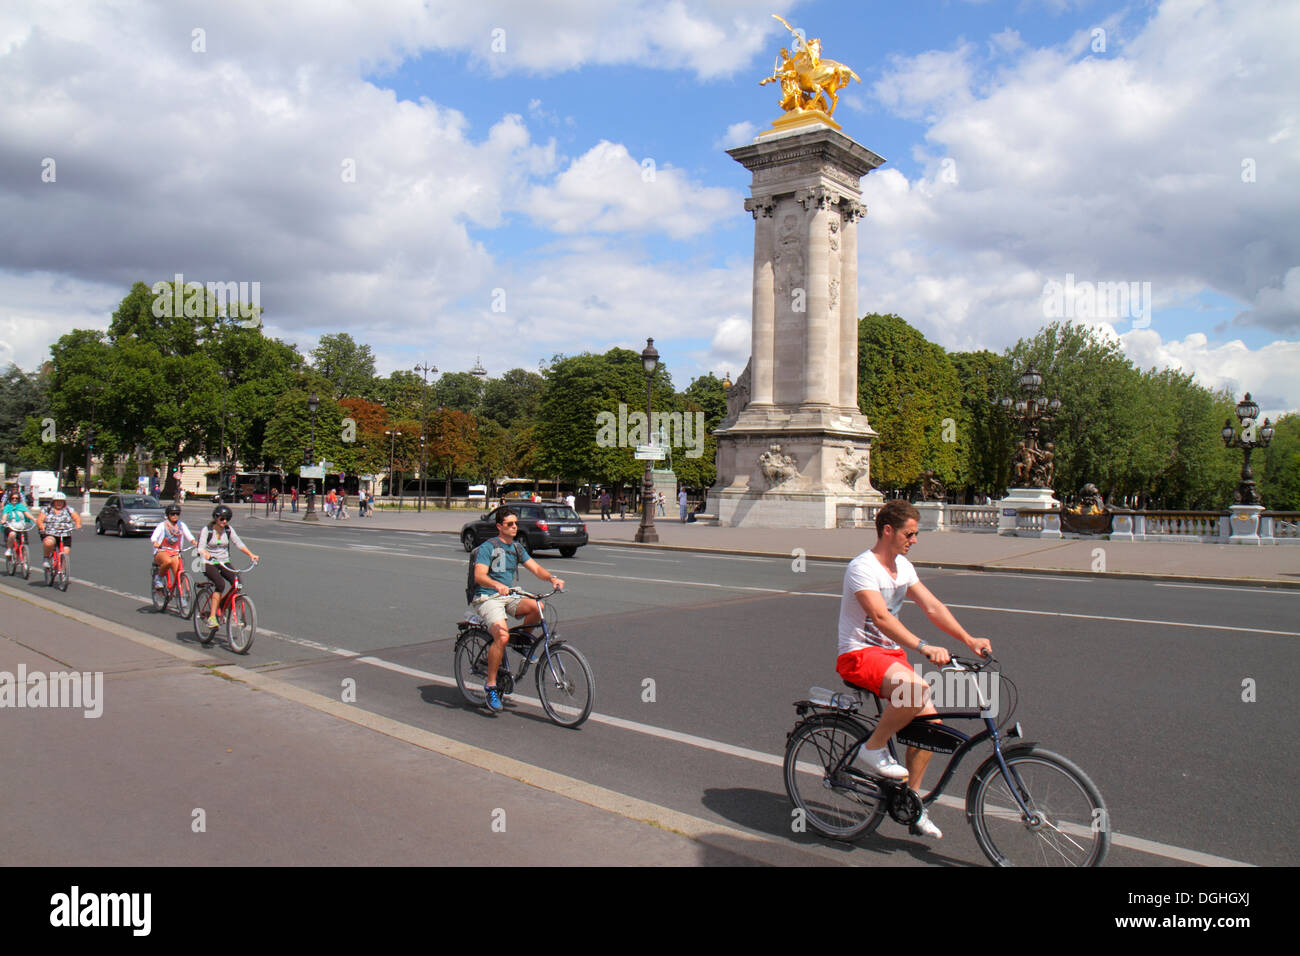 Parigi Francia,Fiume Senna,Pont Alexandre III,ponte,lampade Art Nouveau,statua dorata,uomo uomo maschio,bicicletta,bicicletta,equitazione,ciclismo,ciclista,biciclette,ciclisti, Foto Stock